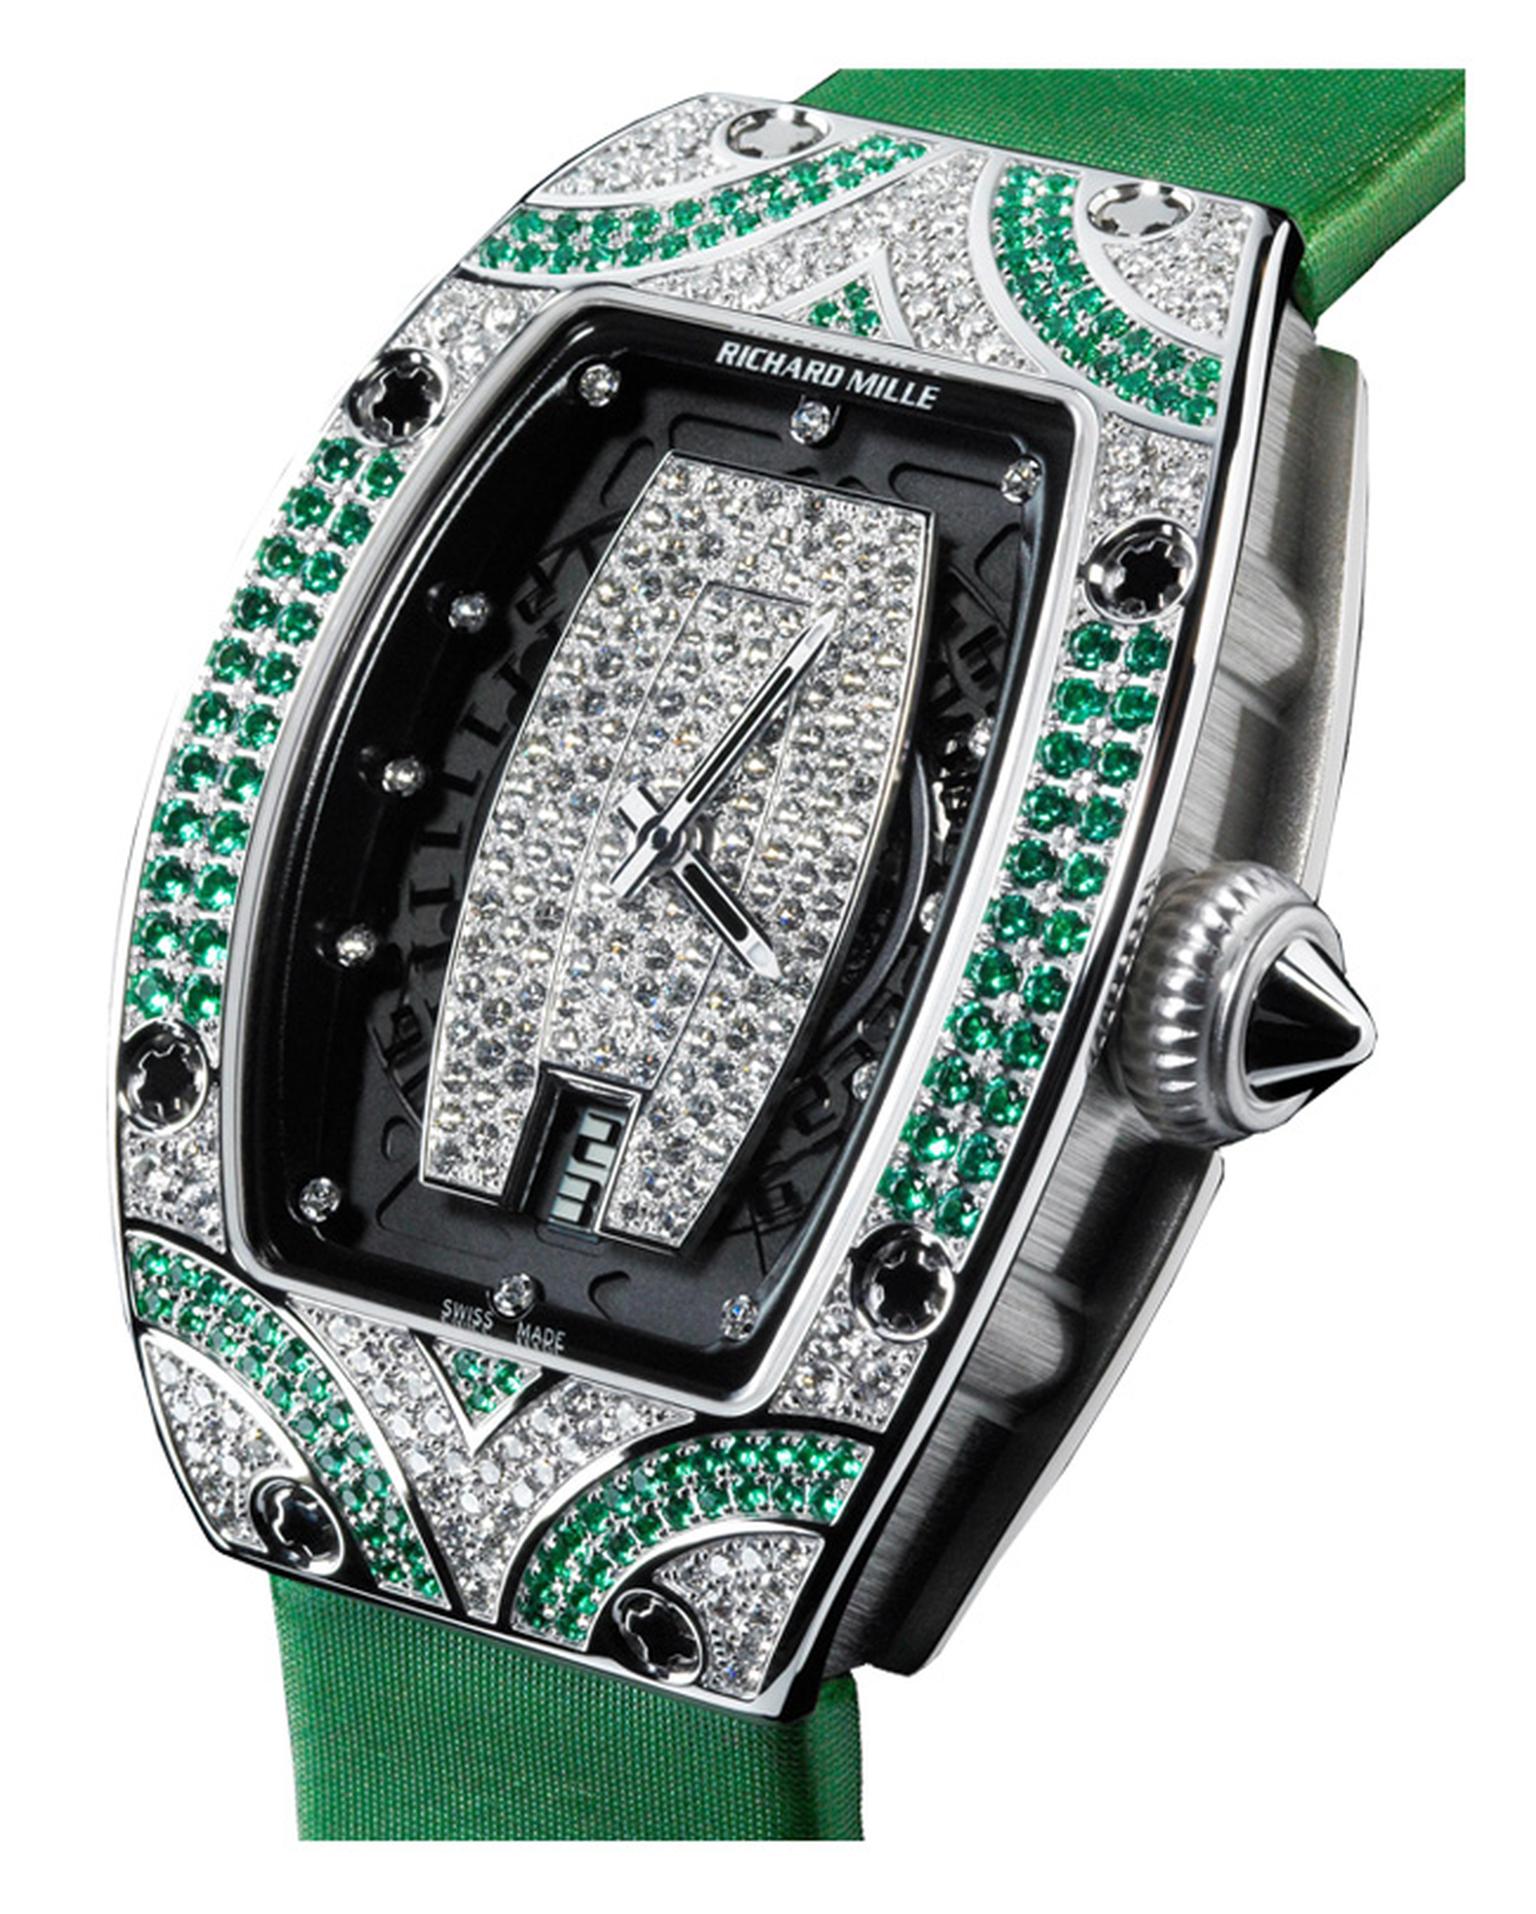 Richard Mille 007 emeralds and diamonds_20131017_Main